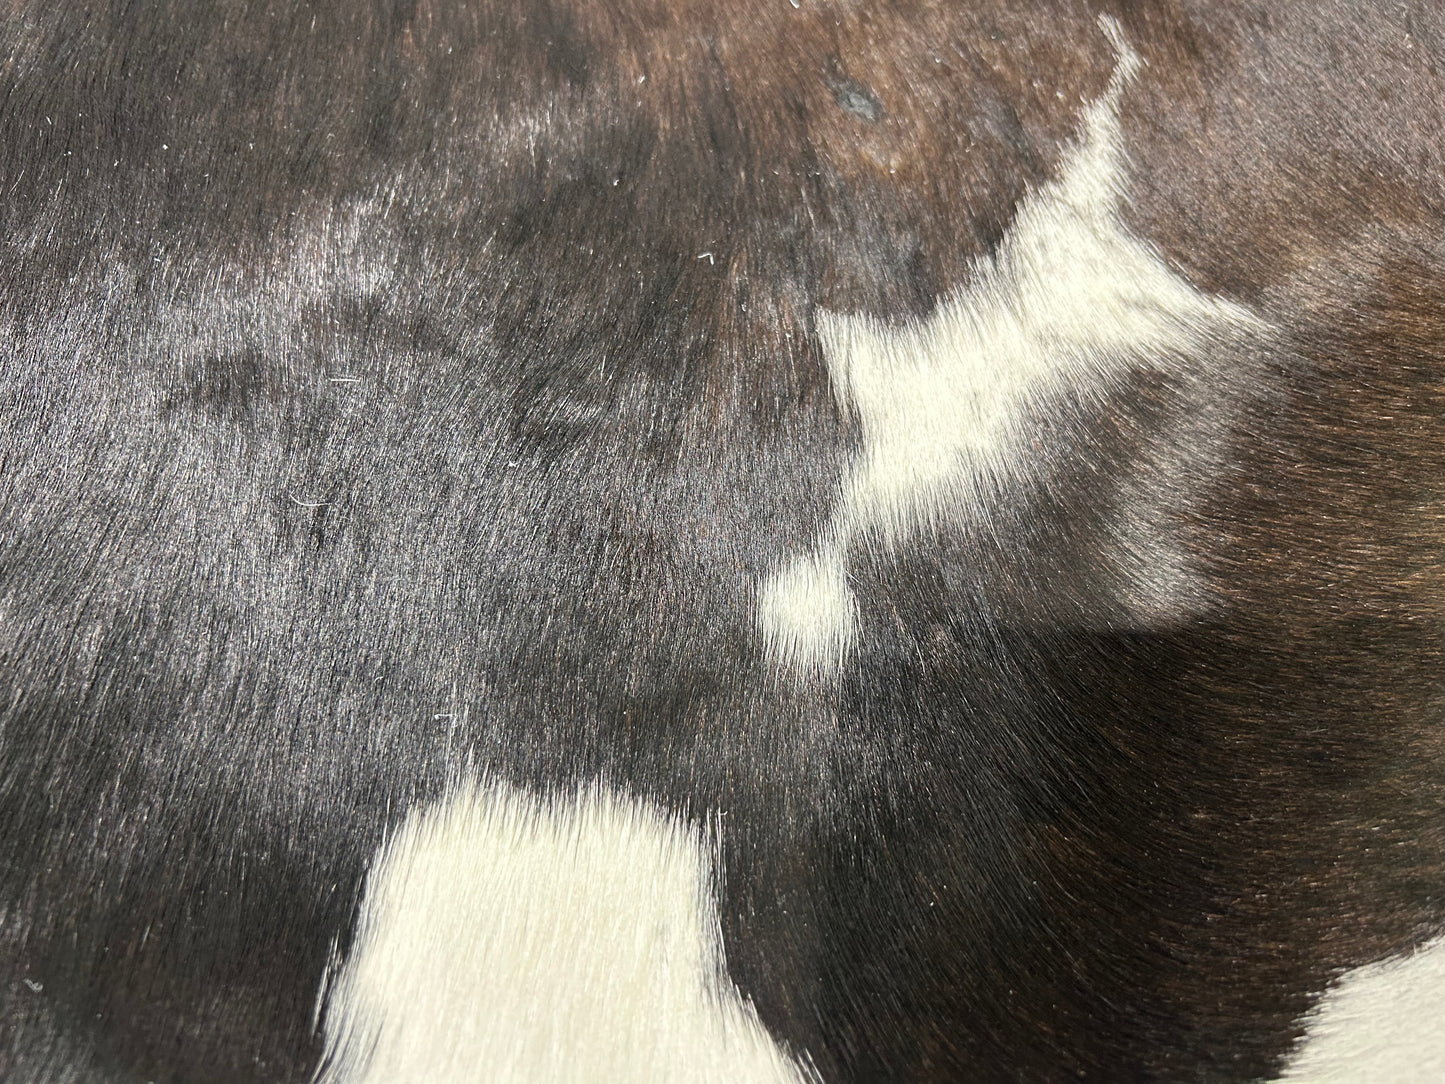 S-1: Cowhide rug - Medium black and white